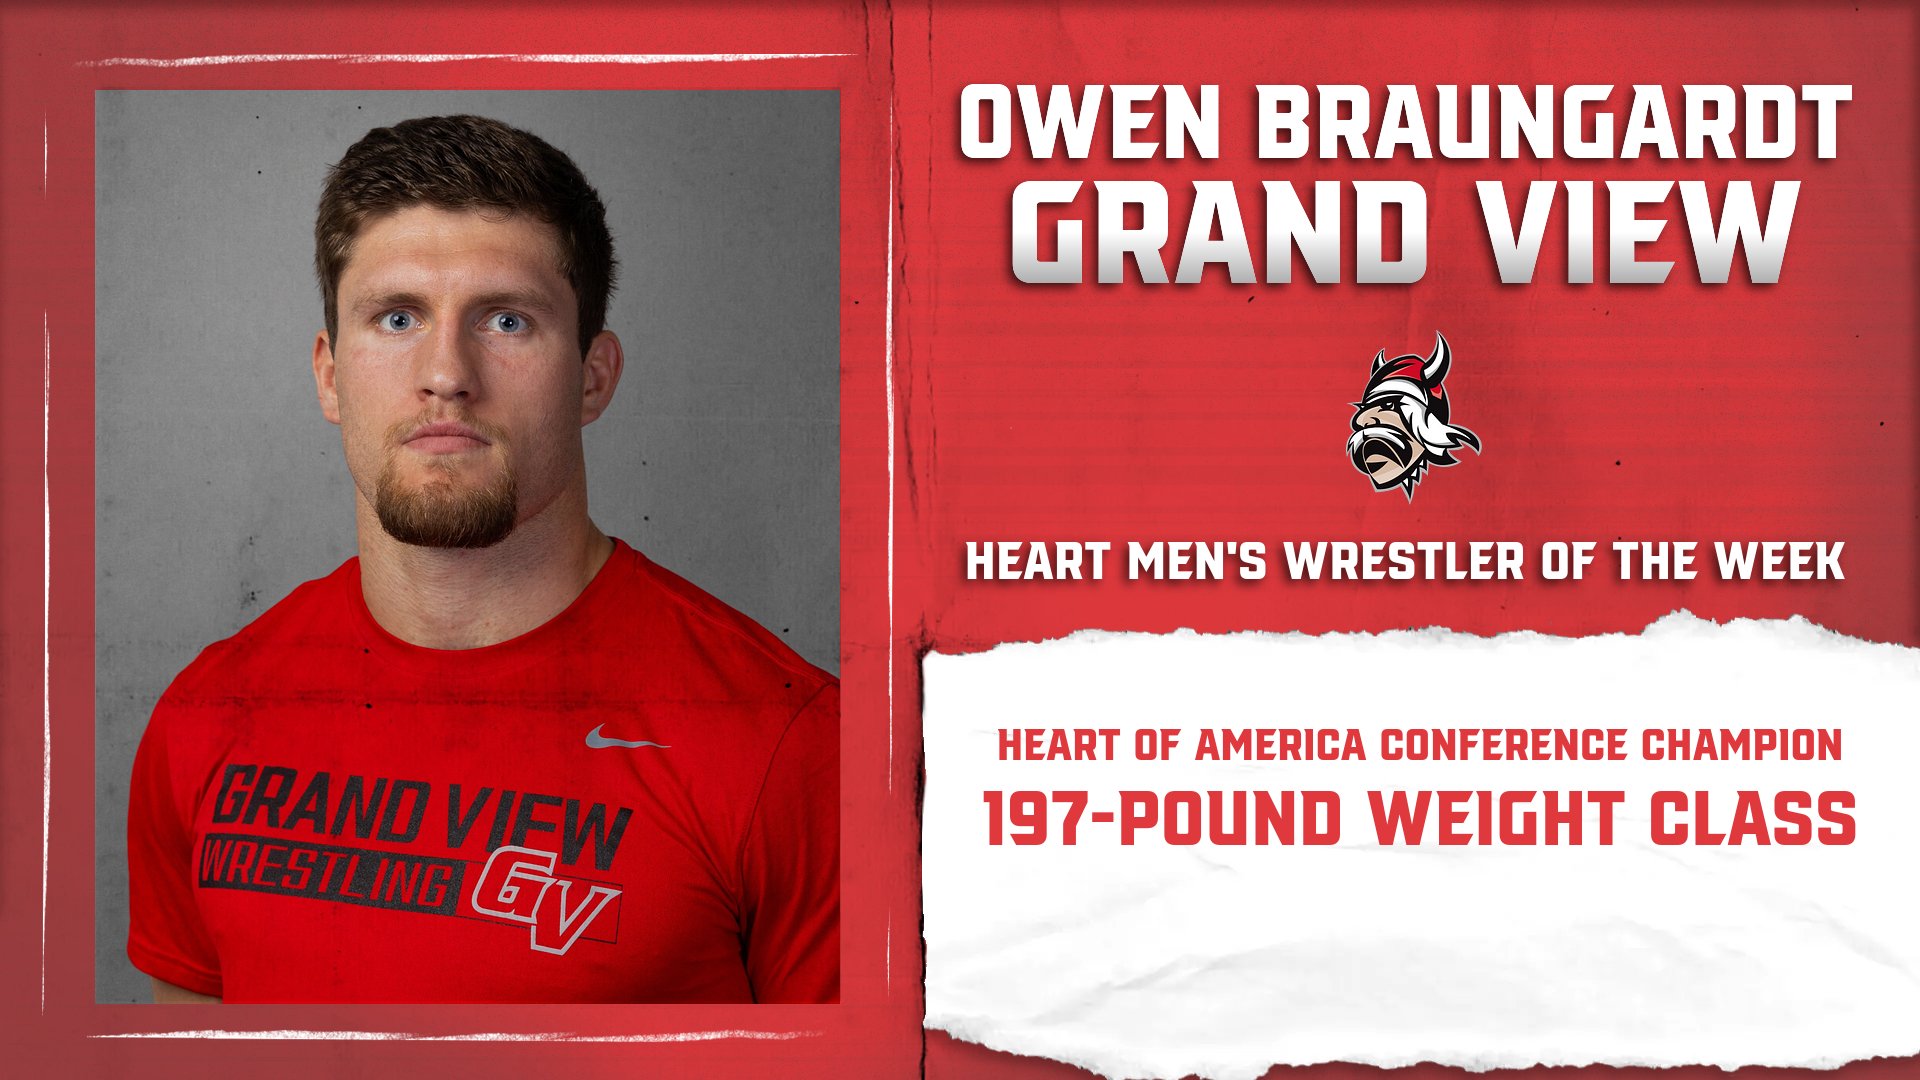 Heart Champion, Owen Braungardt Selected Heart Men’s Wrestler of the Week